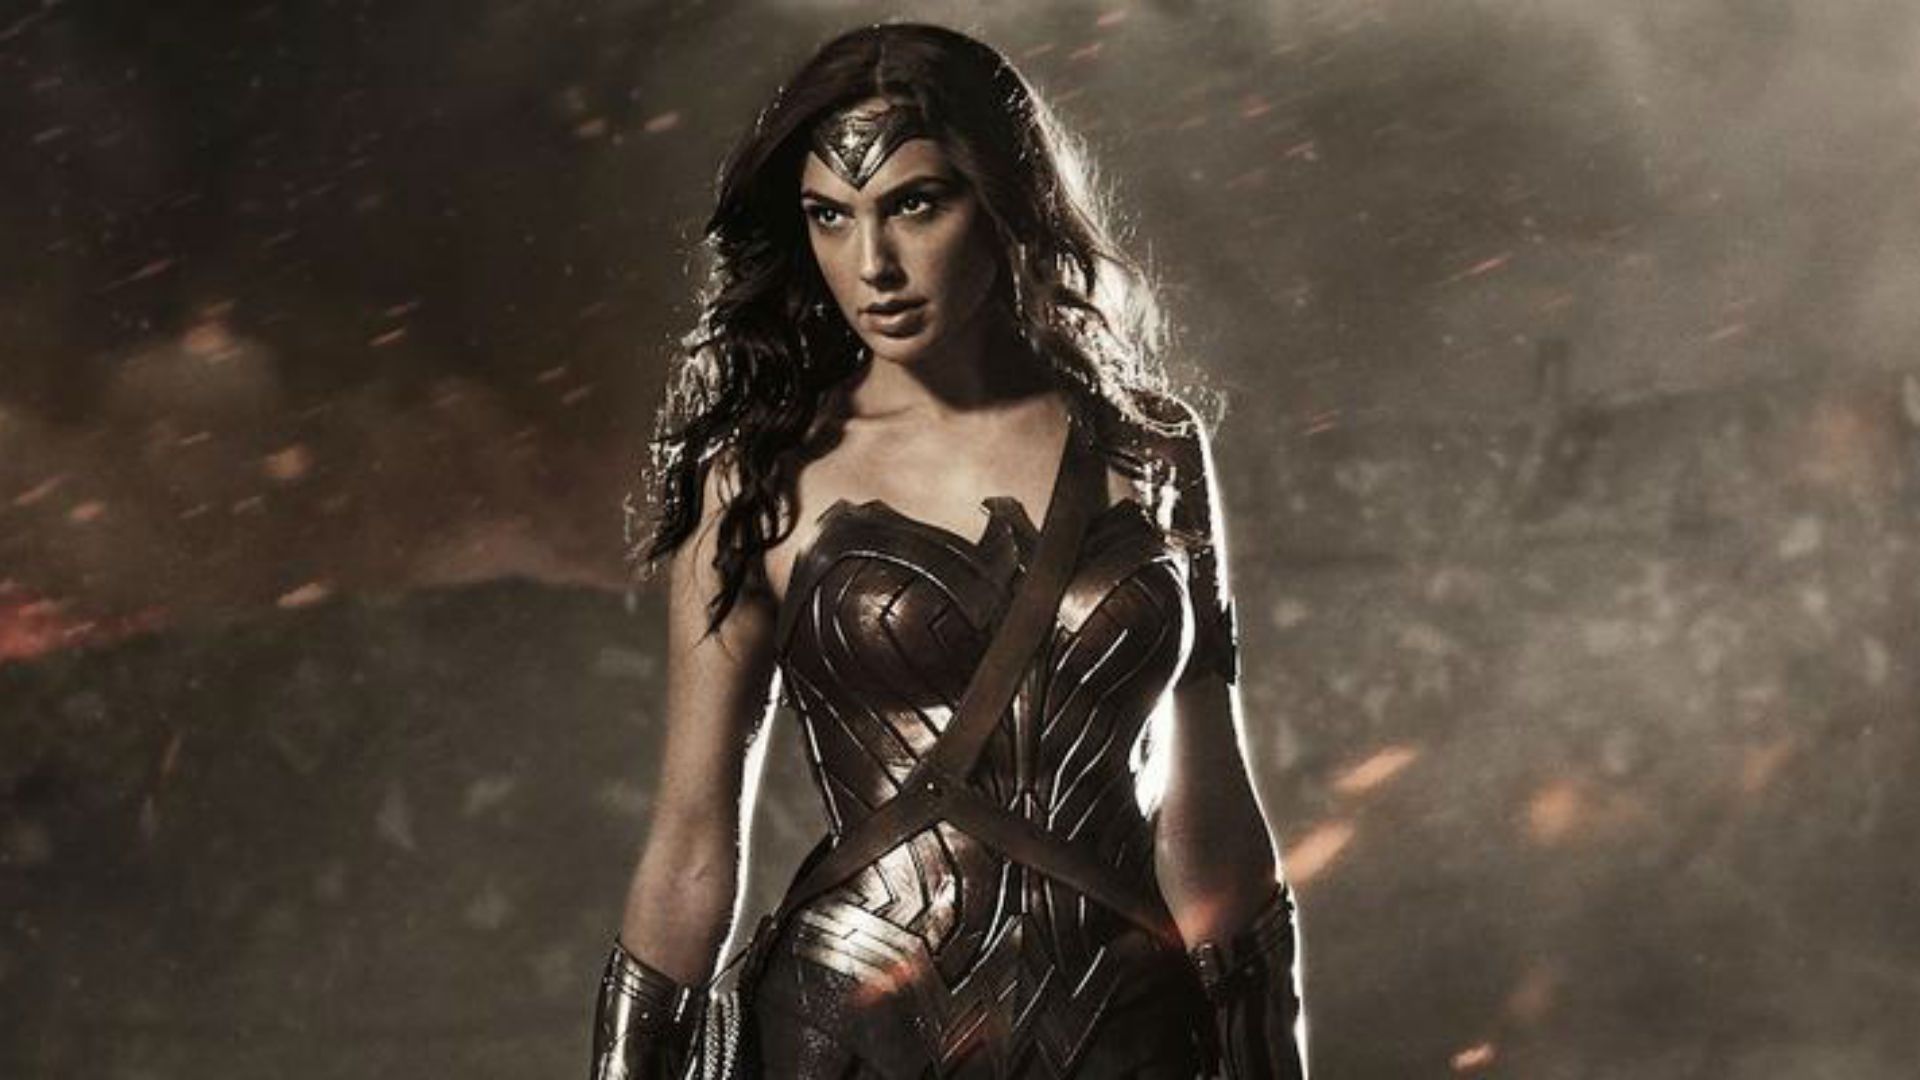 Gal Gadot débutera le tournage de "Wonder Woman" en novembre